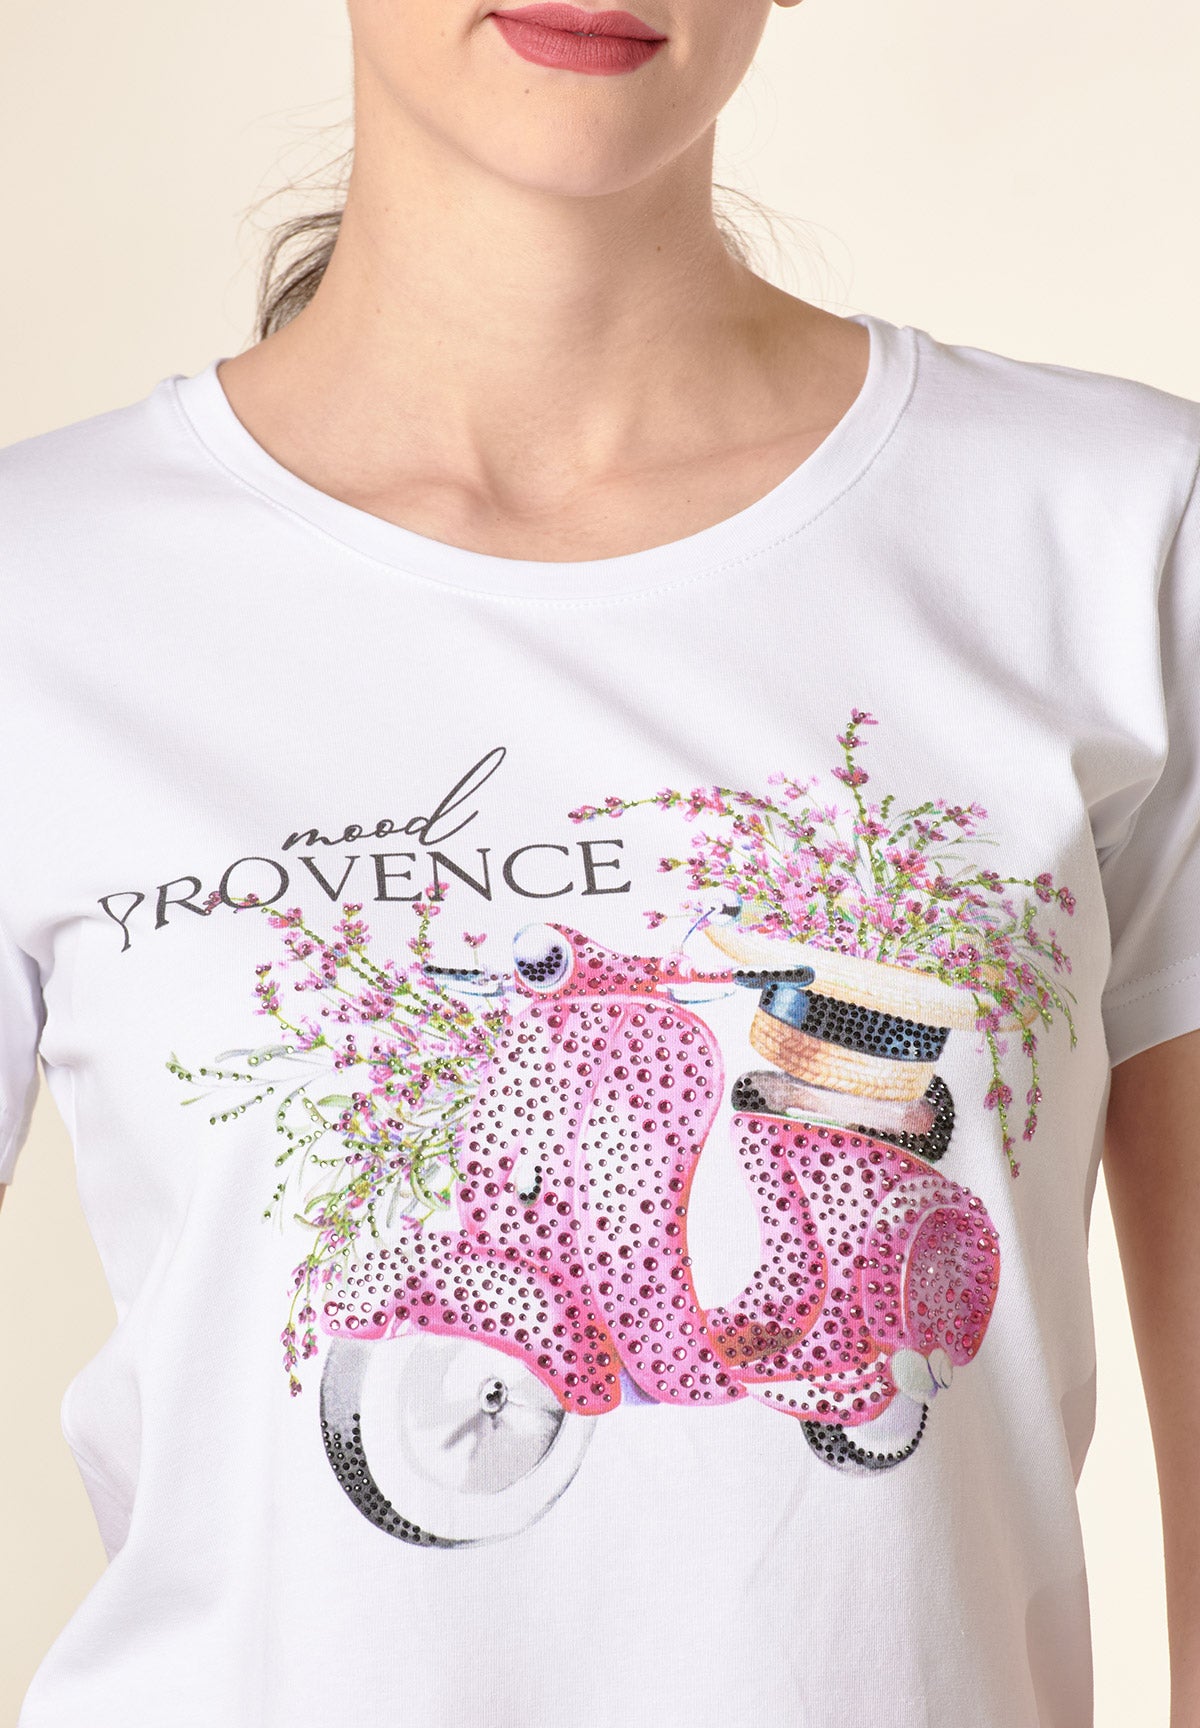 Rosa bedrucktes T-Shirt aus Stretch-Baumwolle